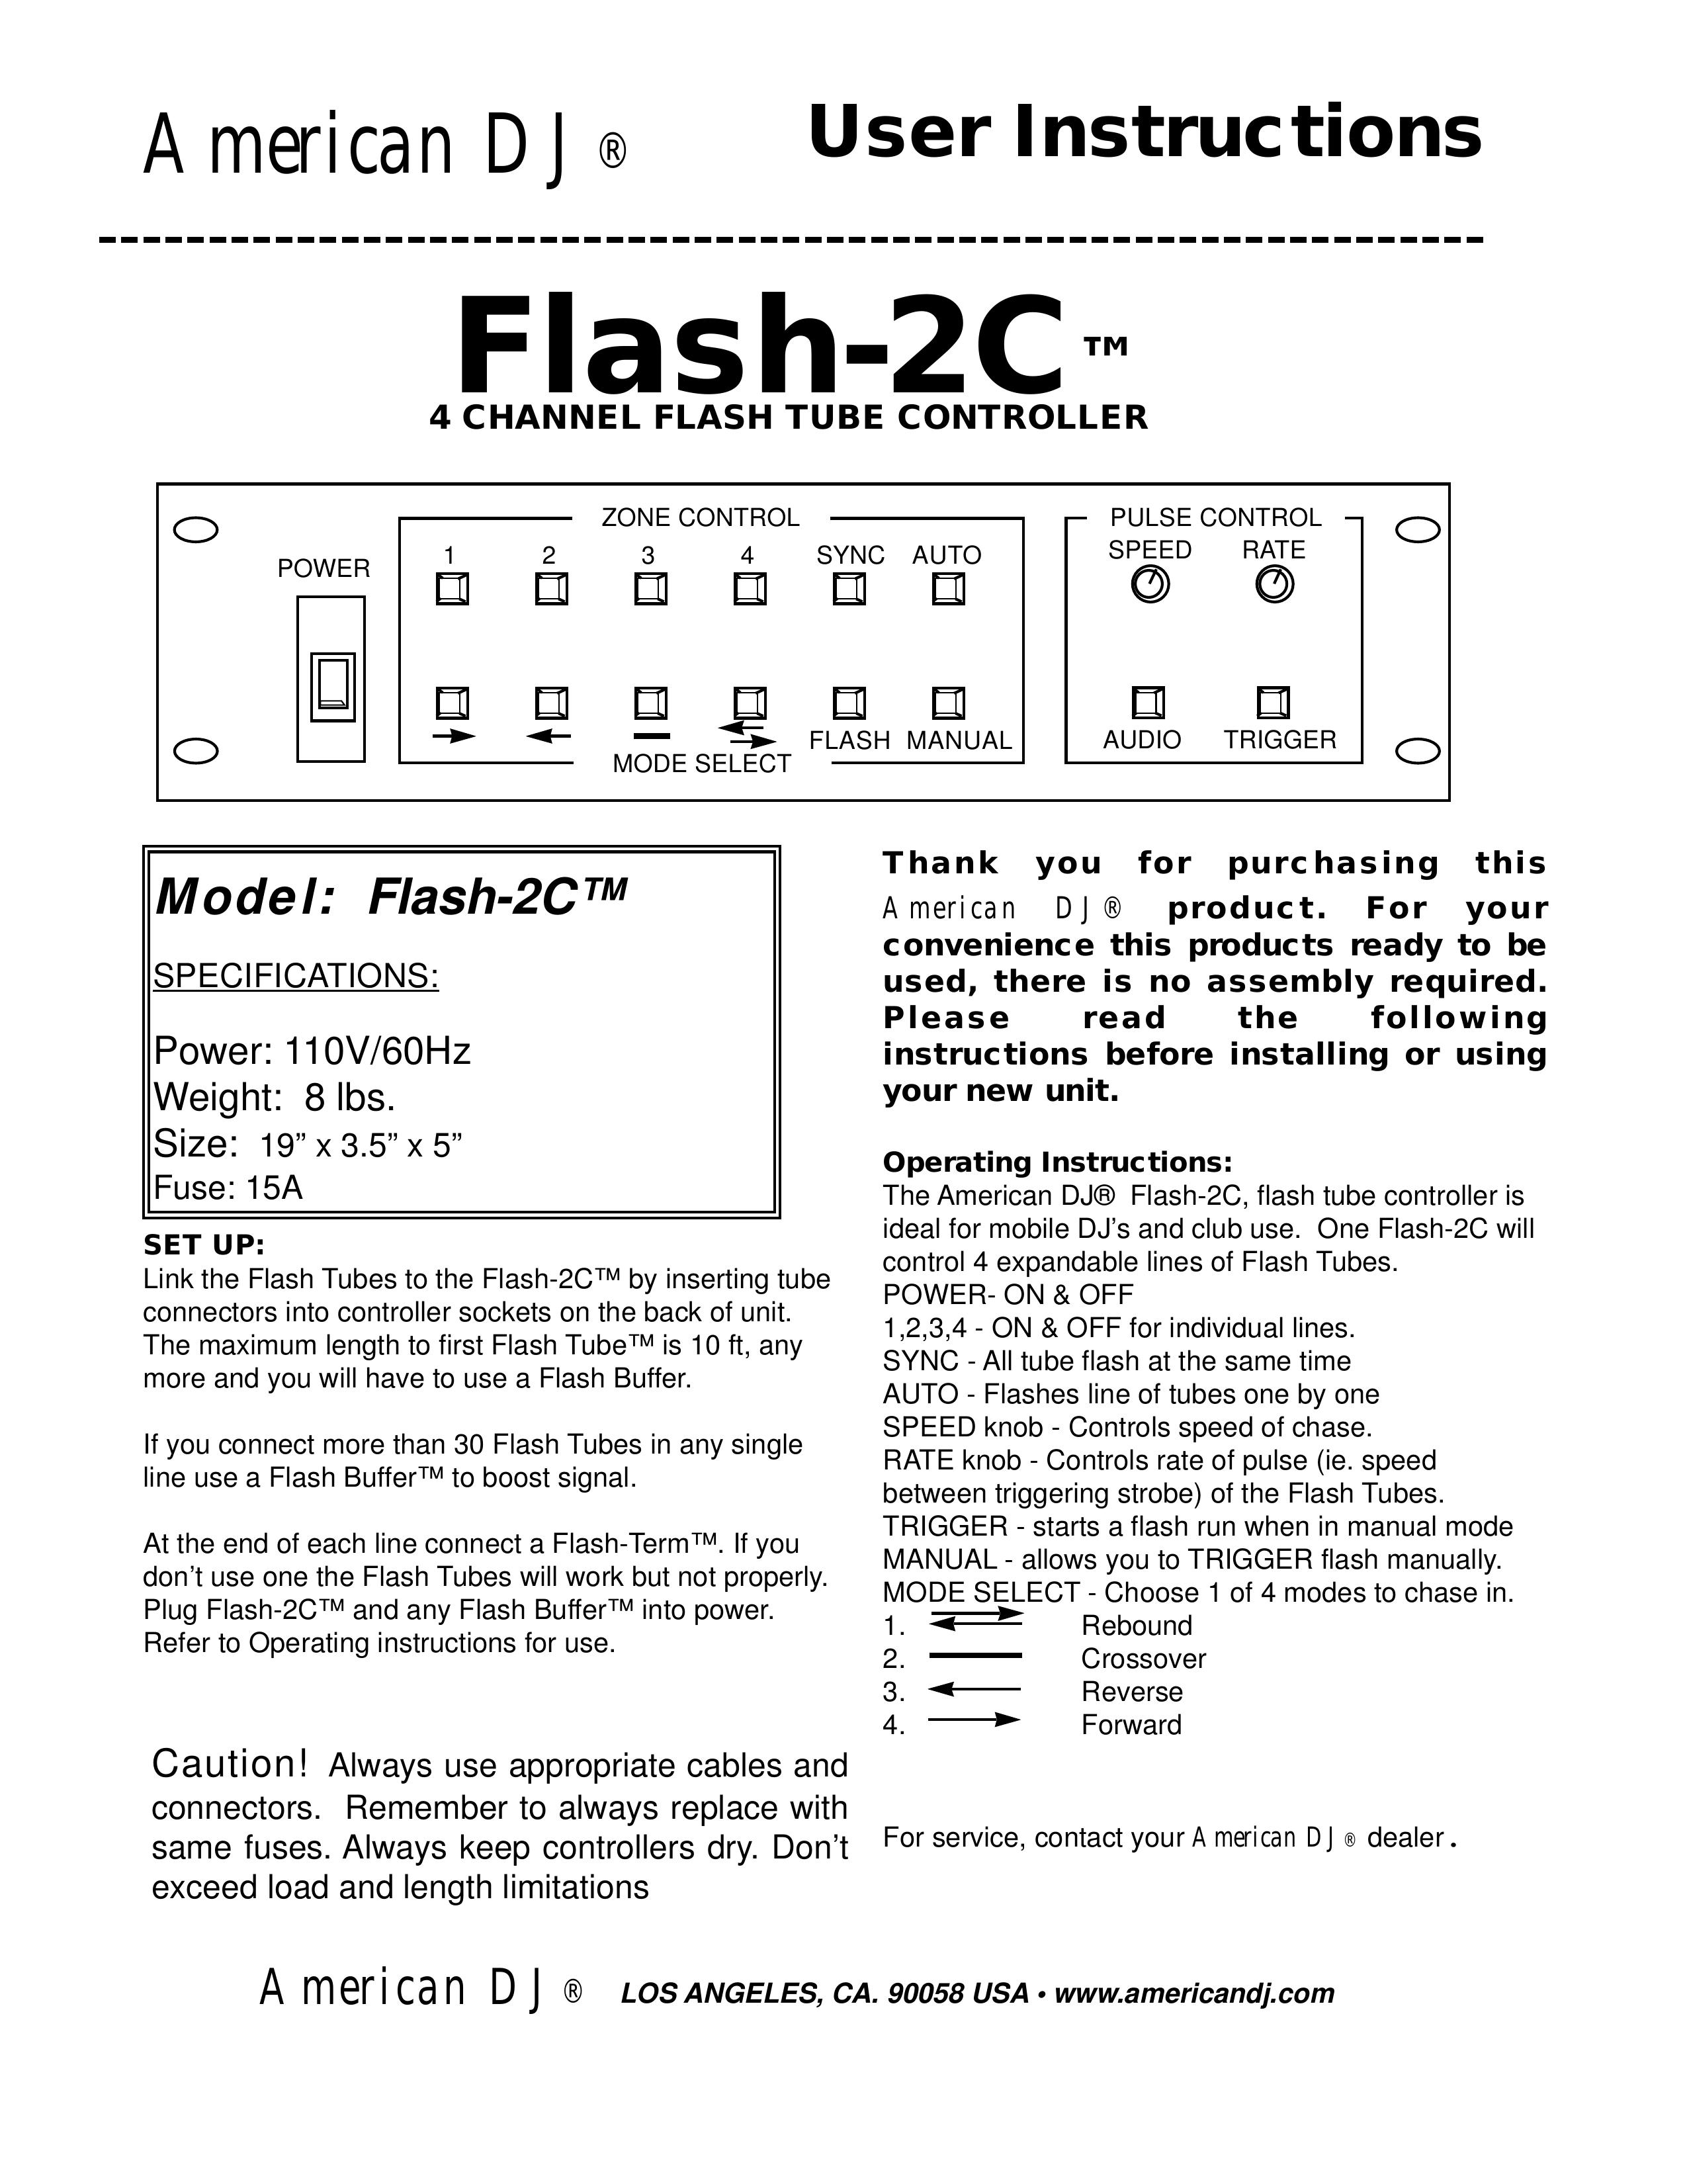 American DJ Flash-2C DJ Equipment User Manual (Page 1)